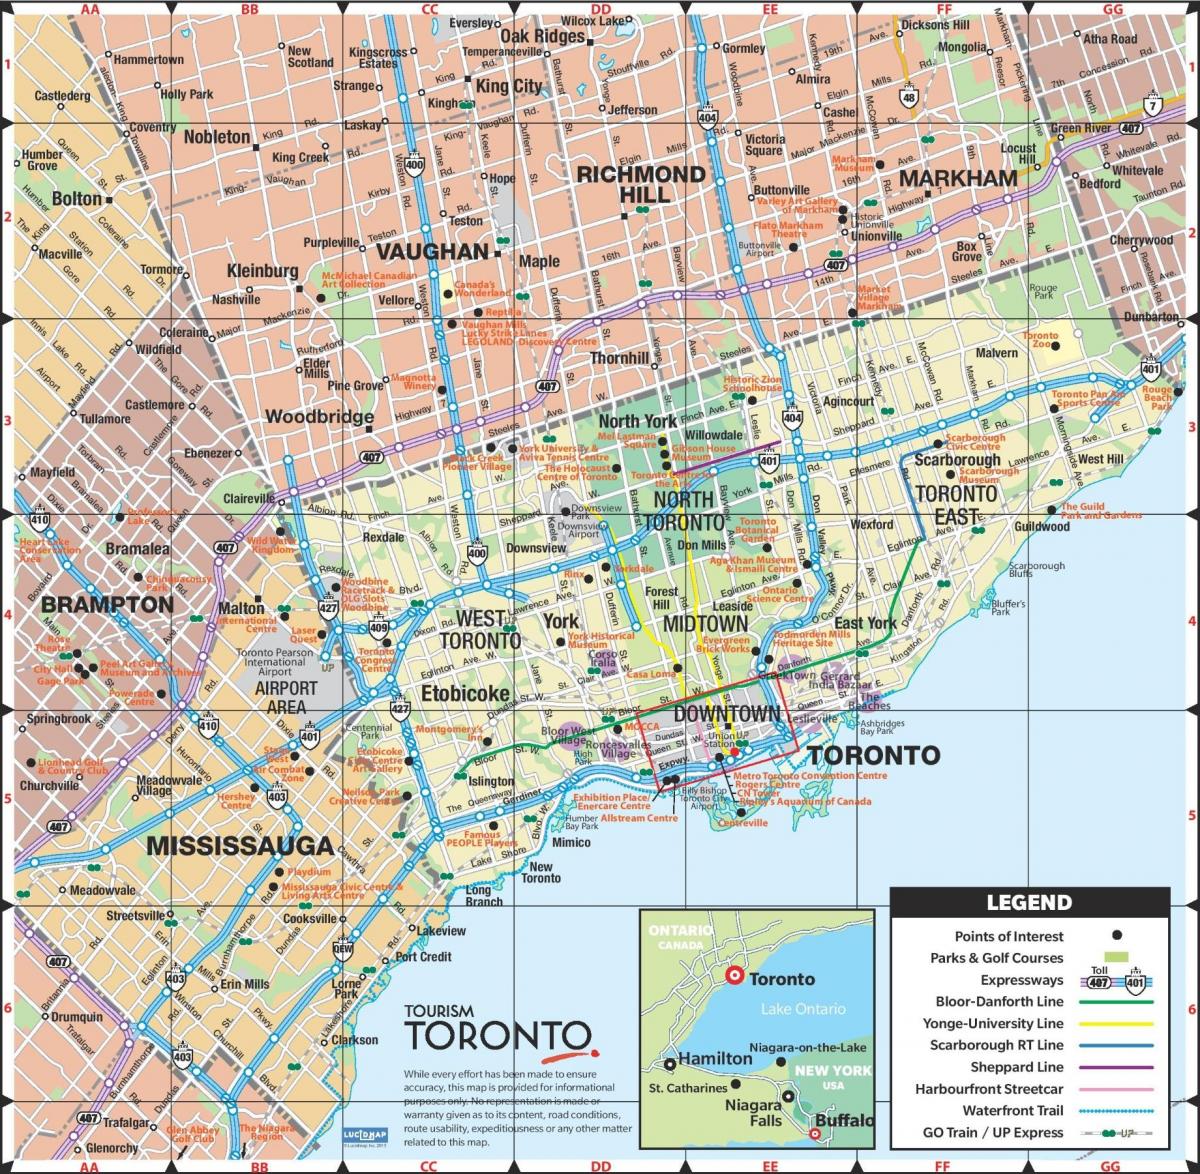 Toronto on map